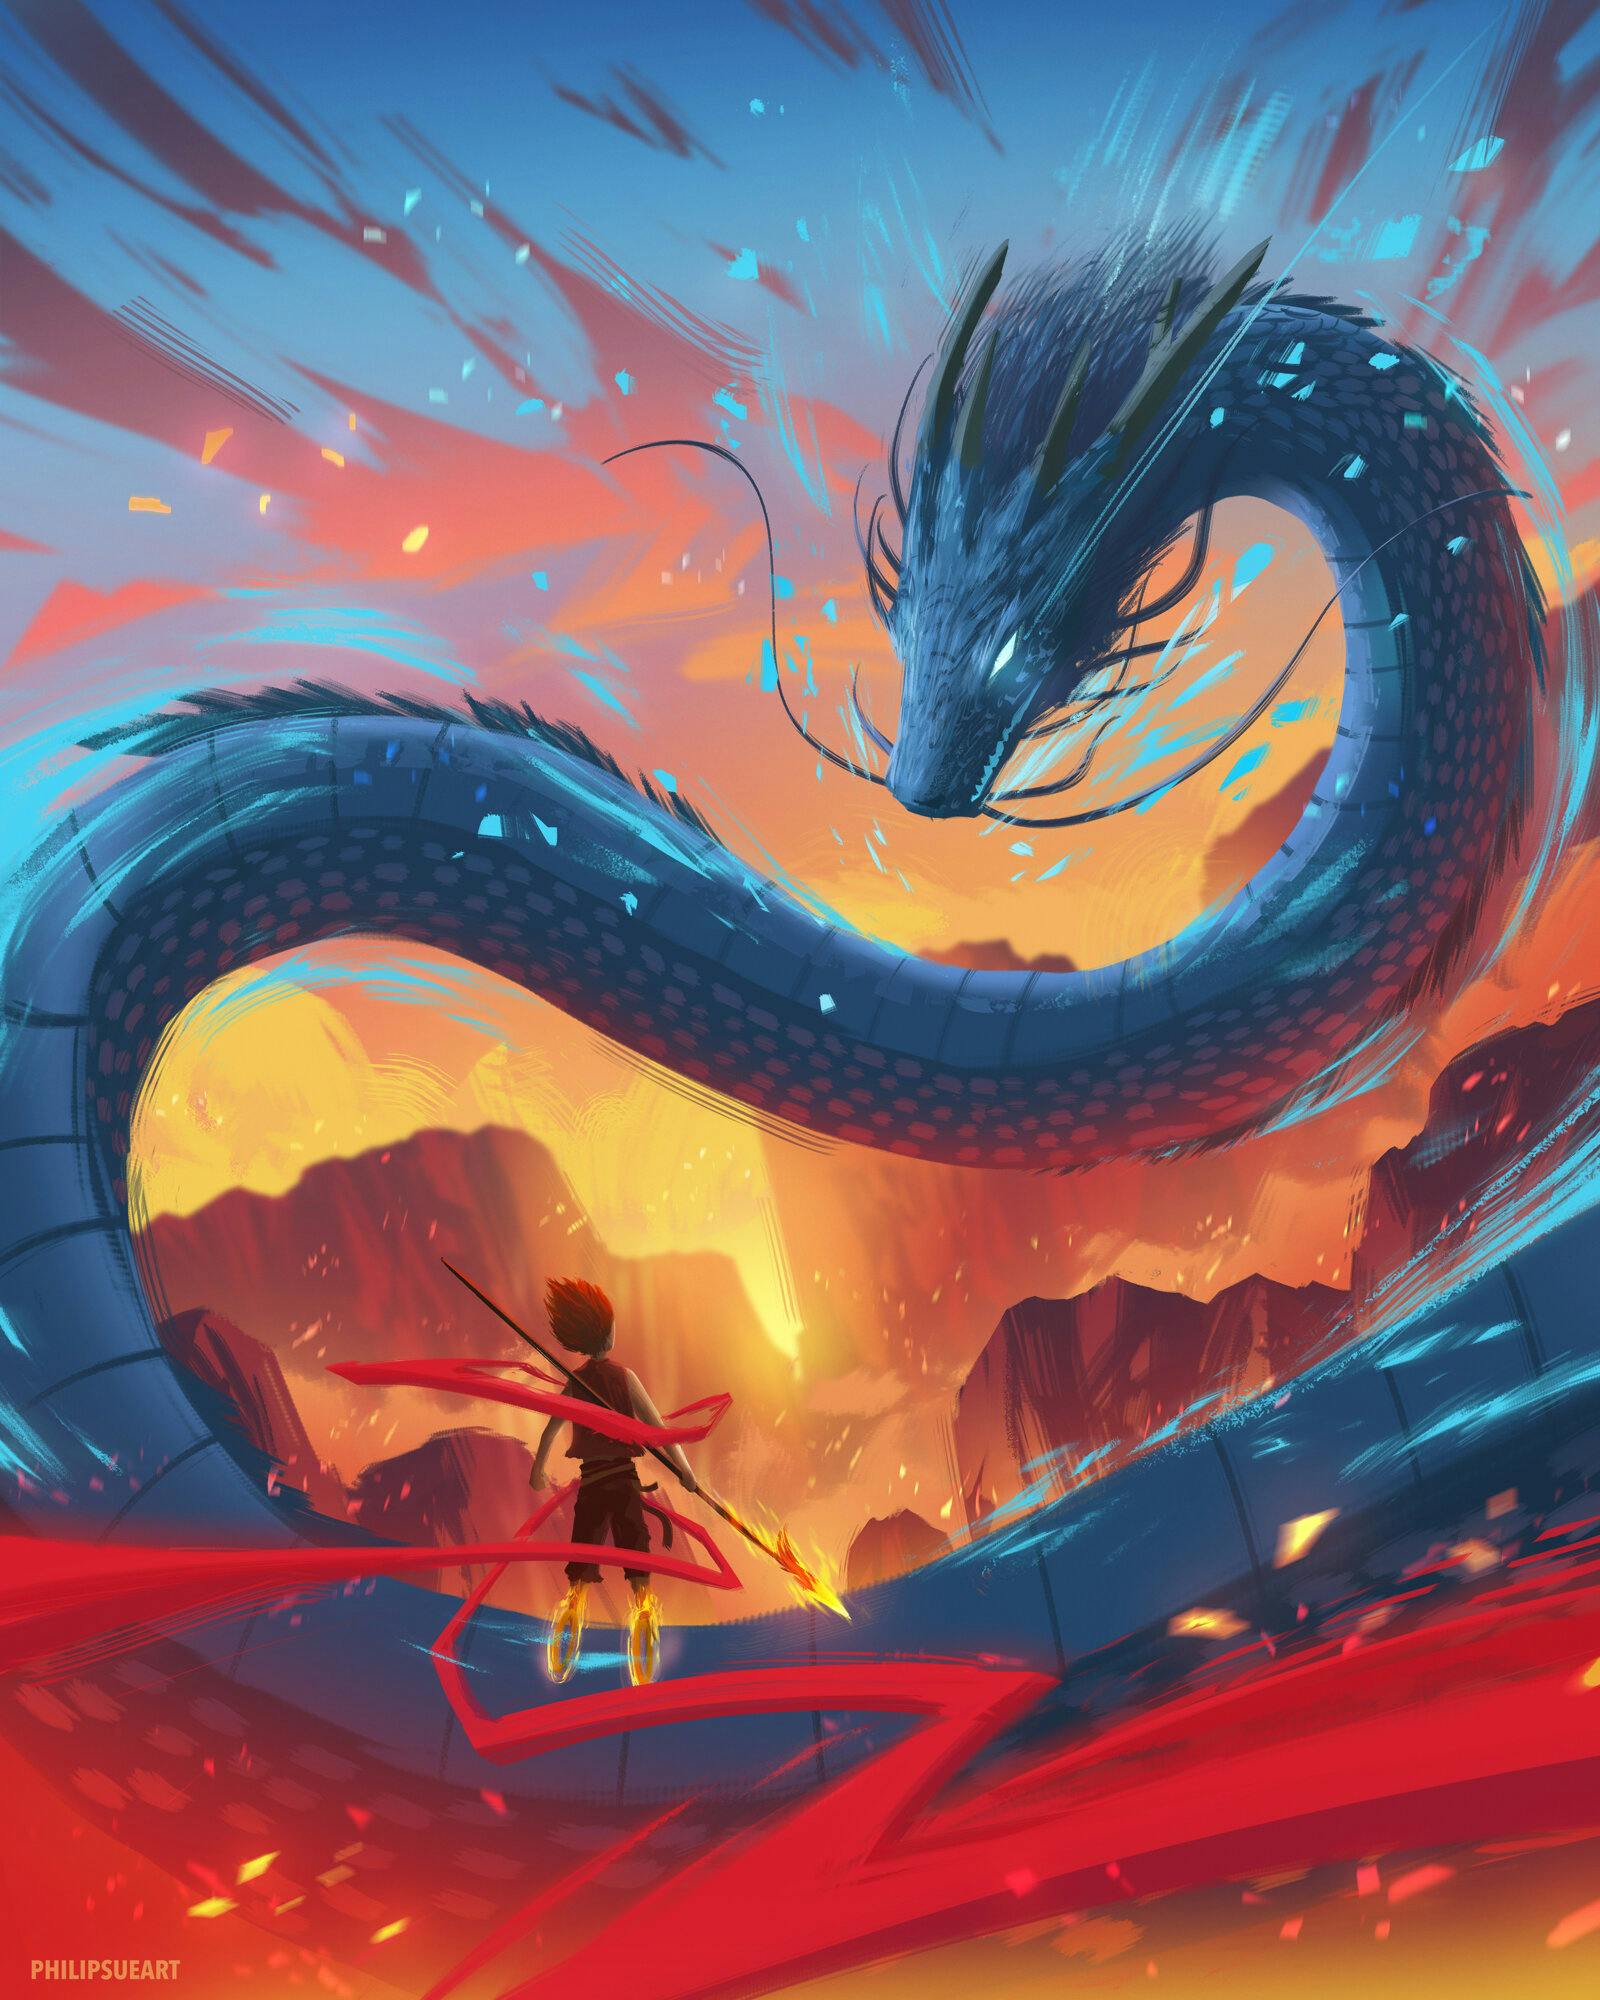 A giant dragon attacking a warrior